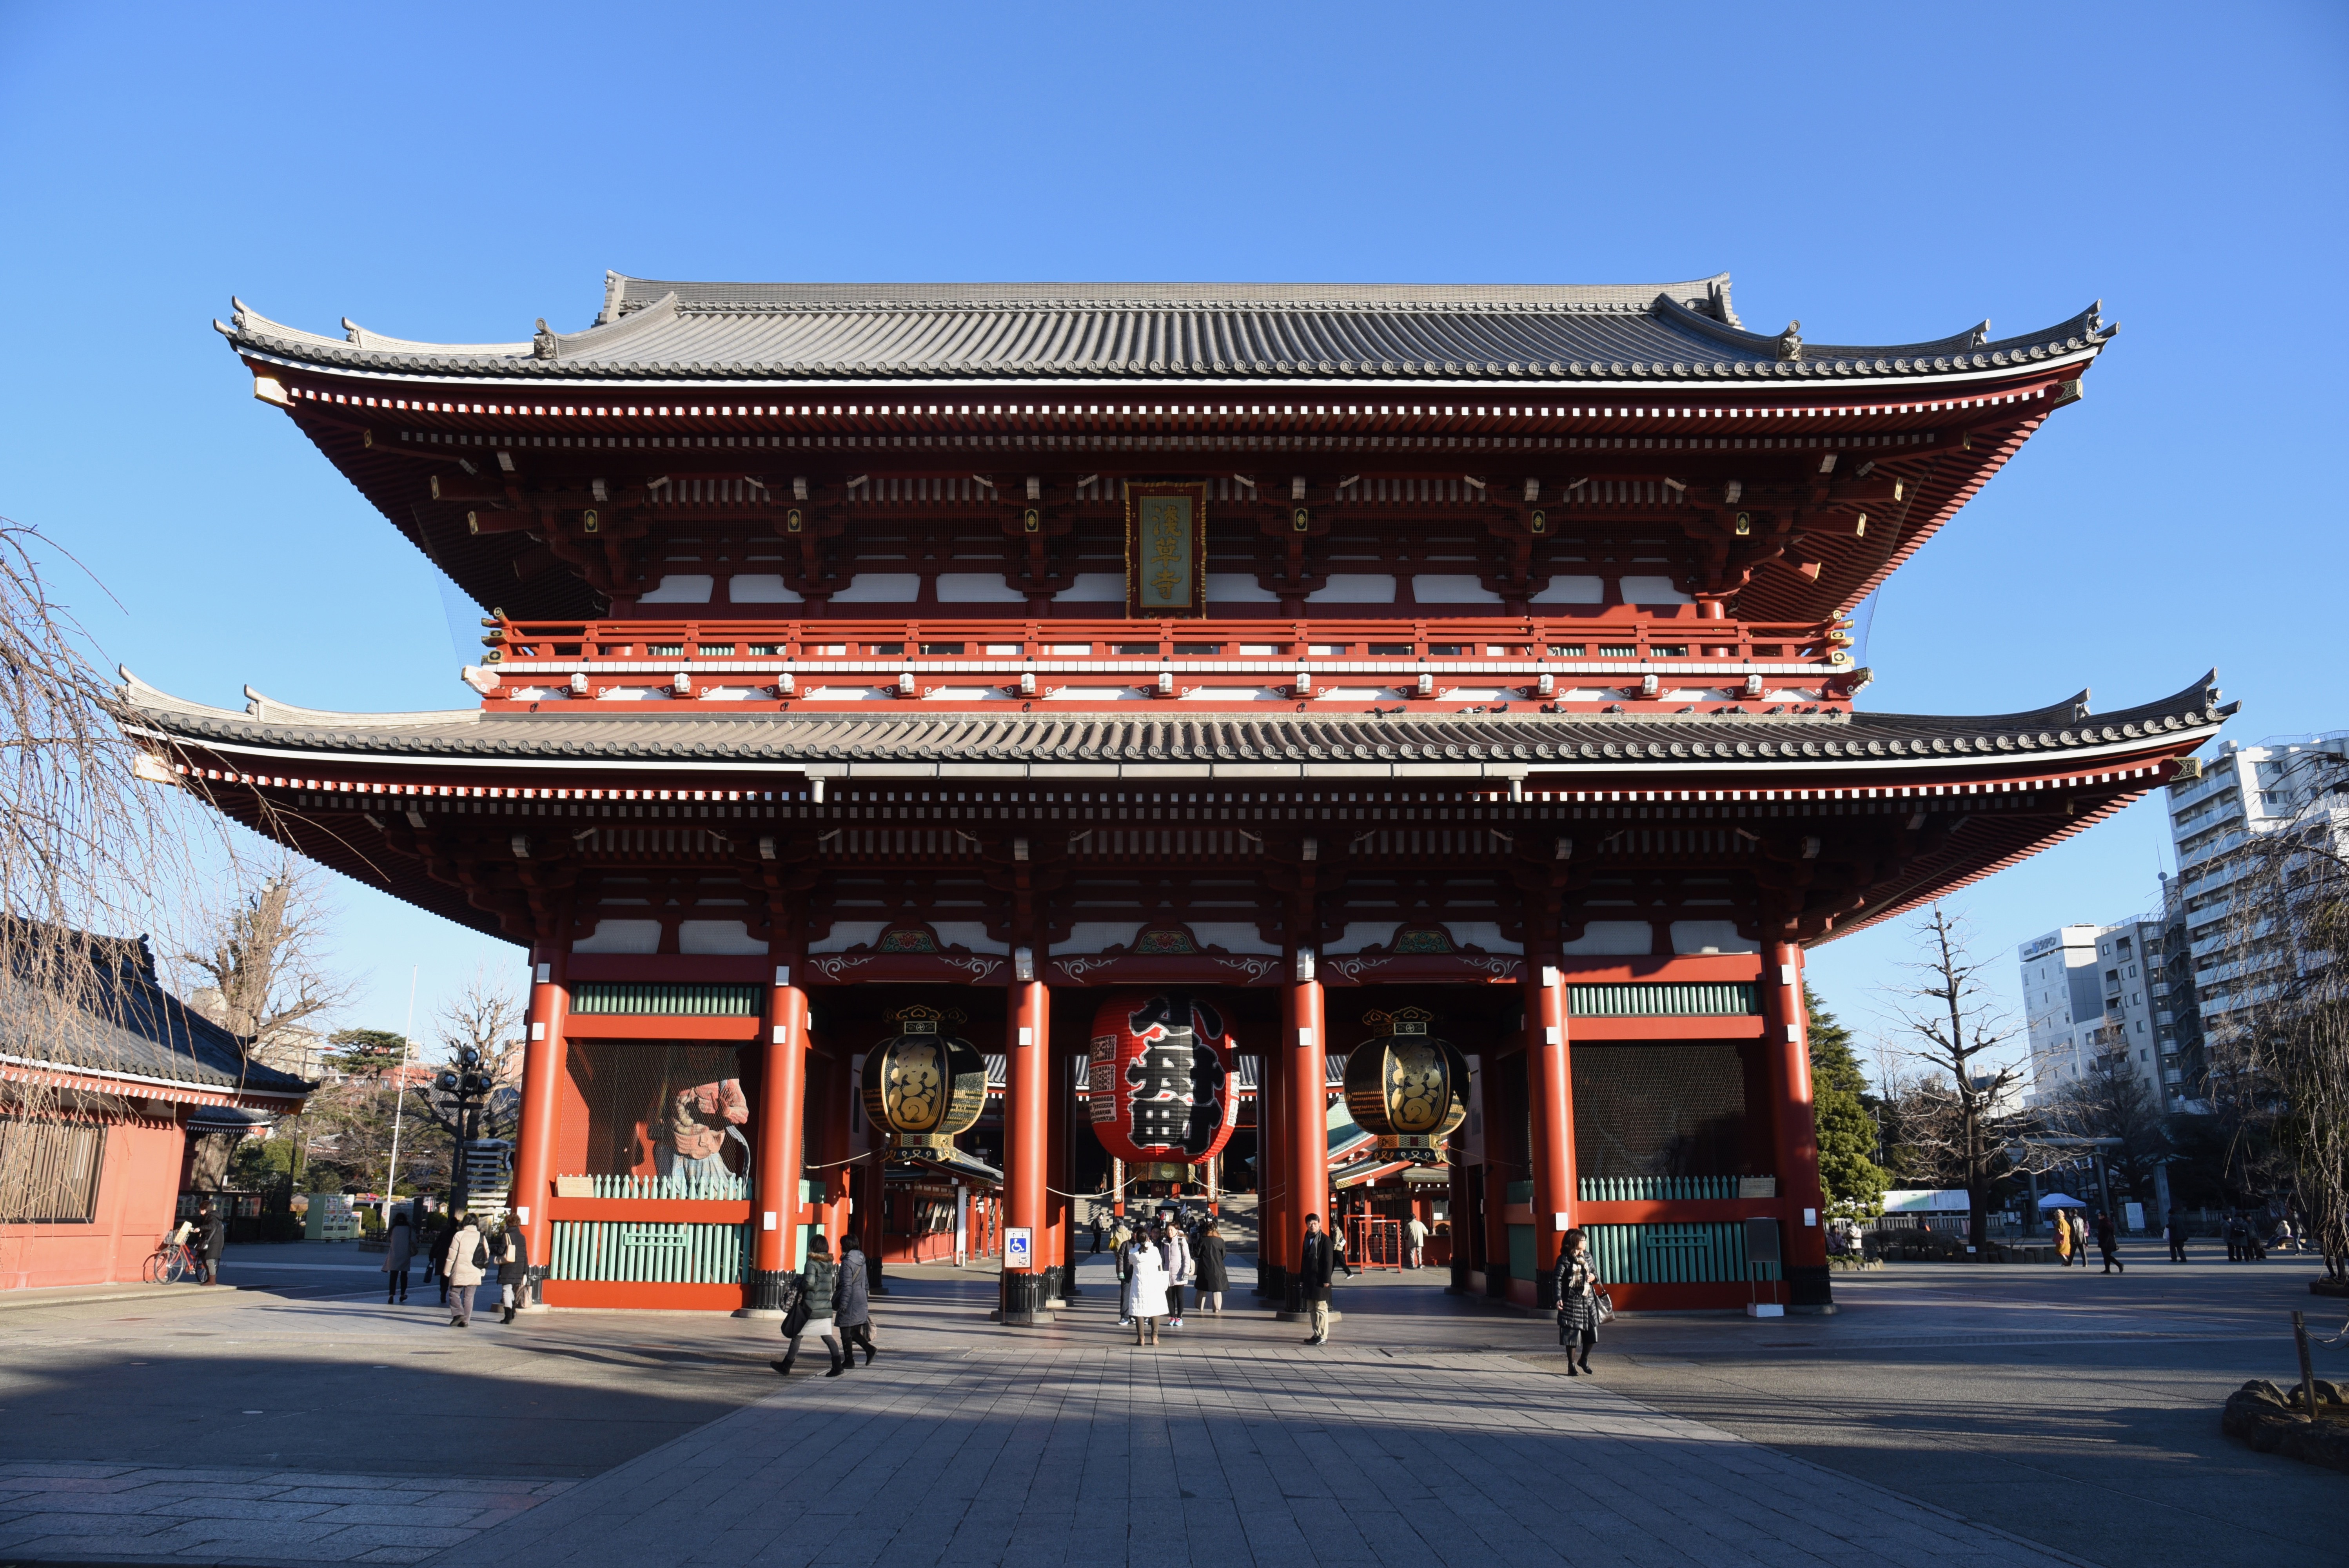 Đền thờ Asakusa Kannon - Asakusa Kannon Temple | Yeudulich